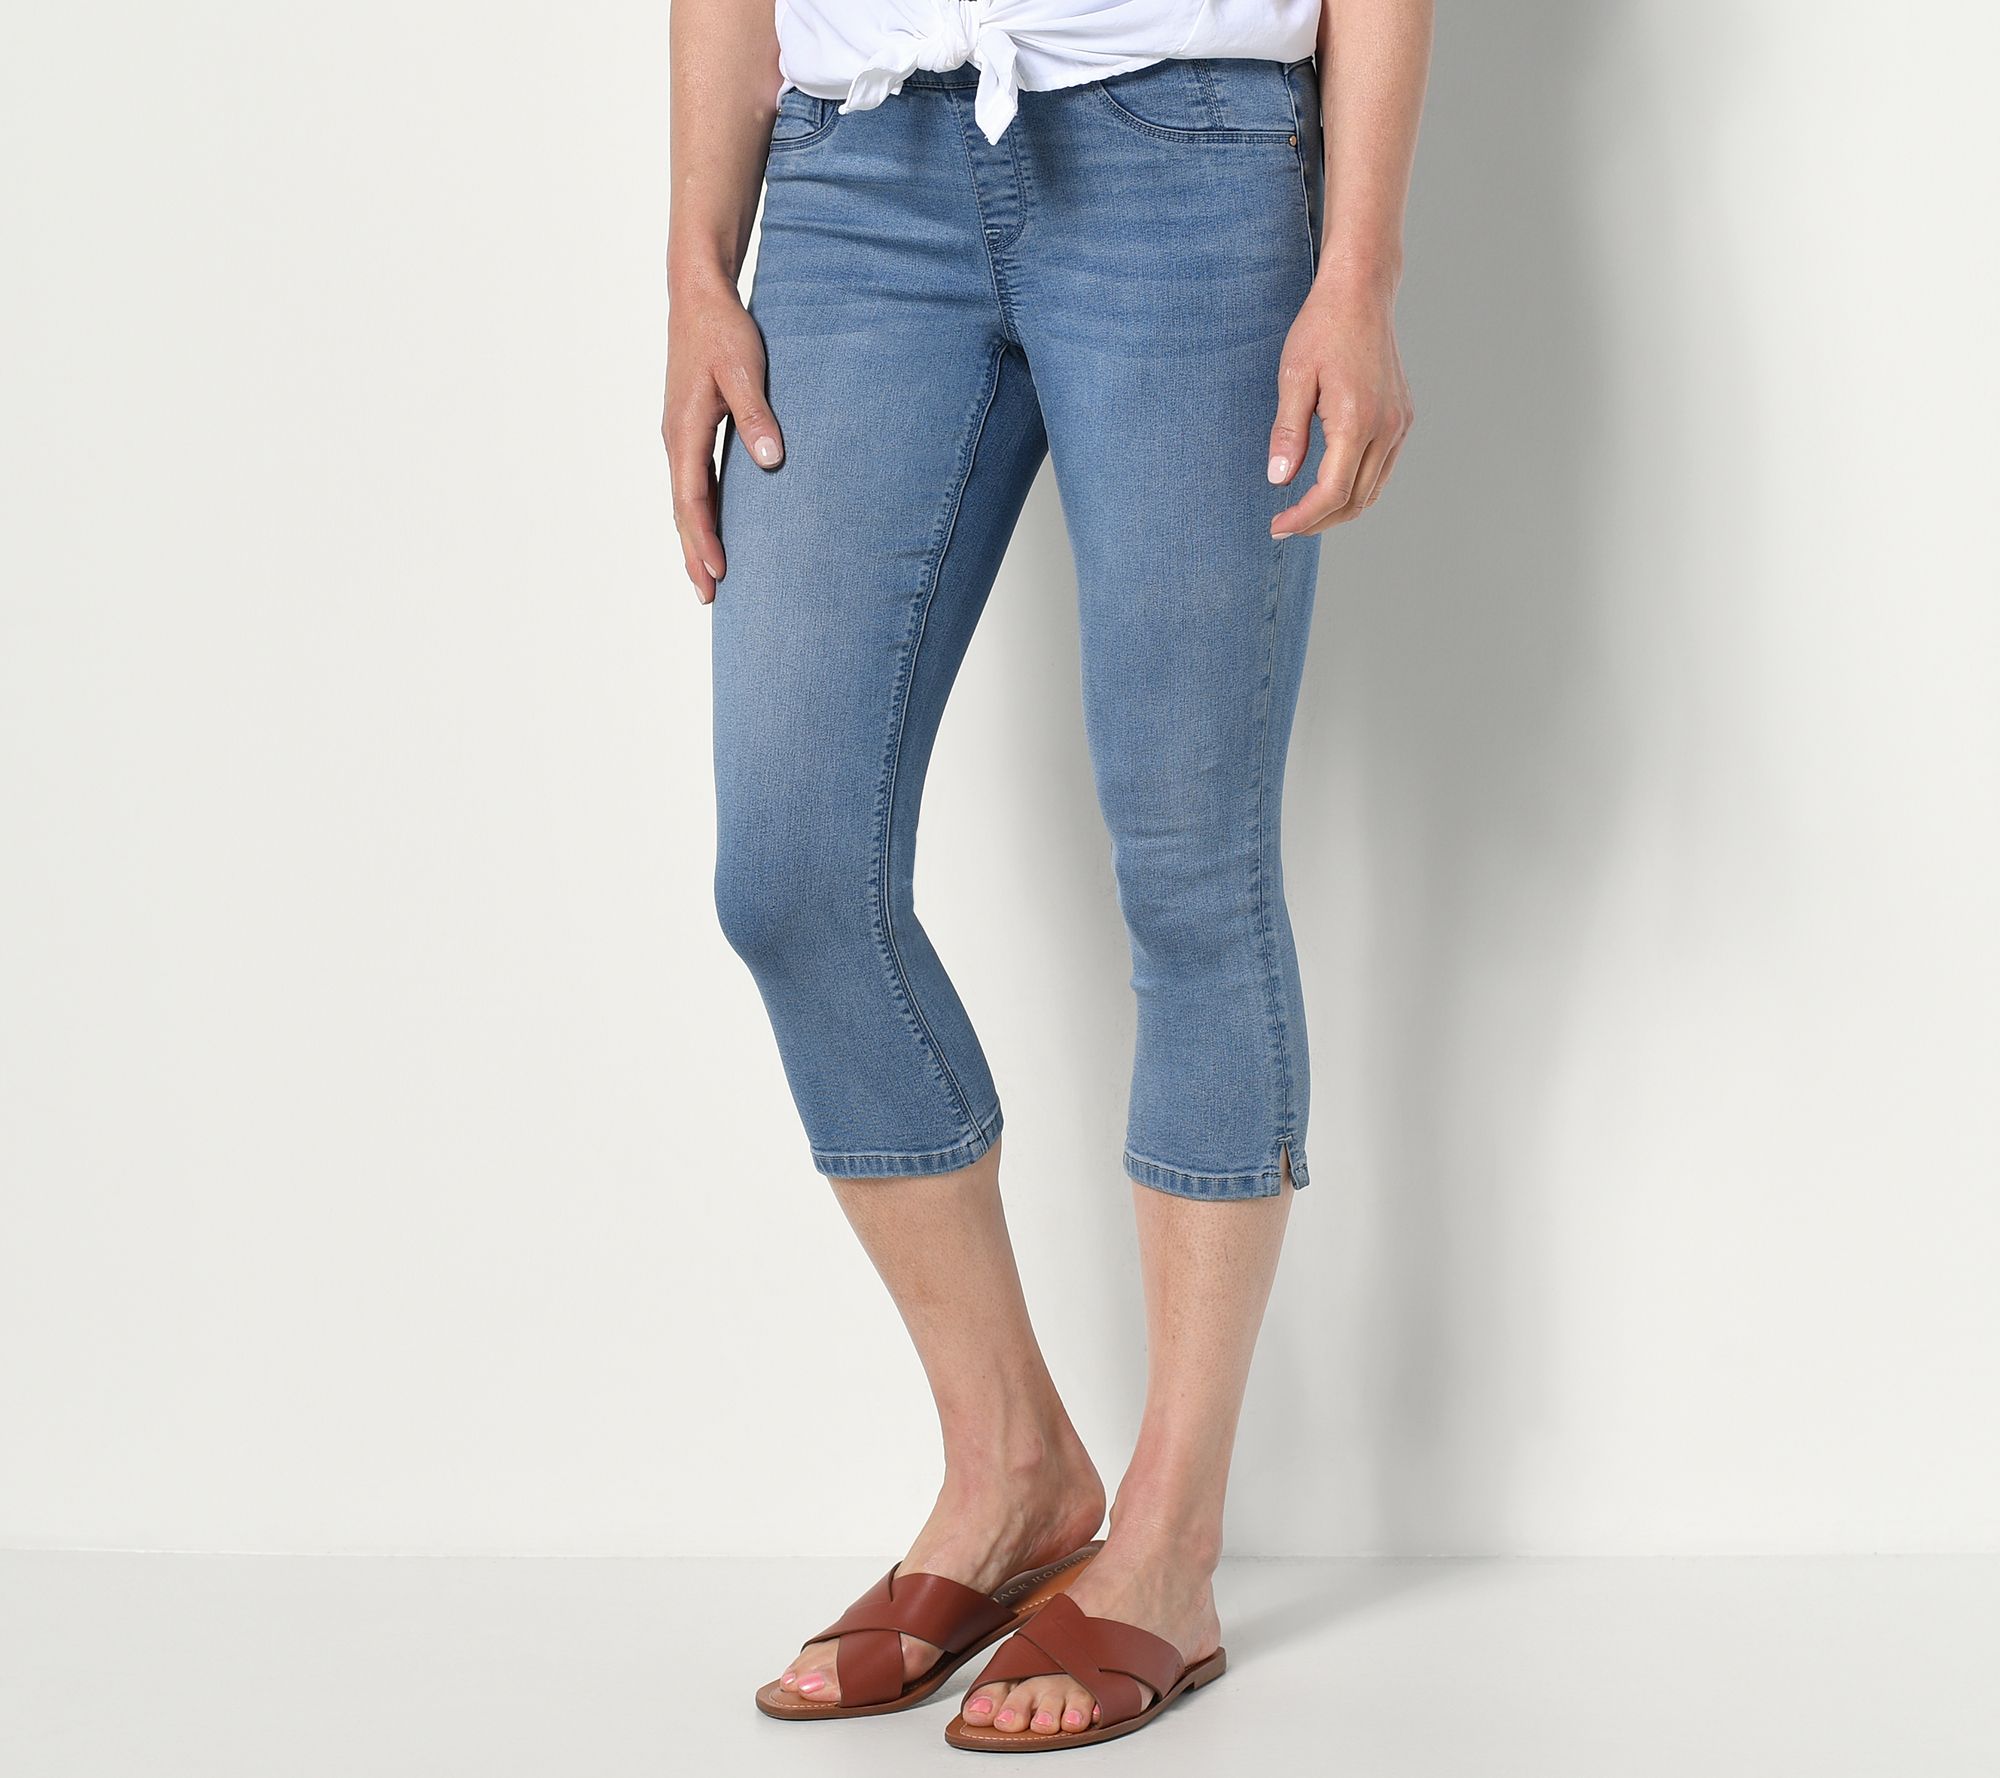 Laurie Felt Petite Silky Denim Capri Jeans w/ Cambre Waist - QVC.com